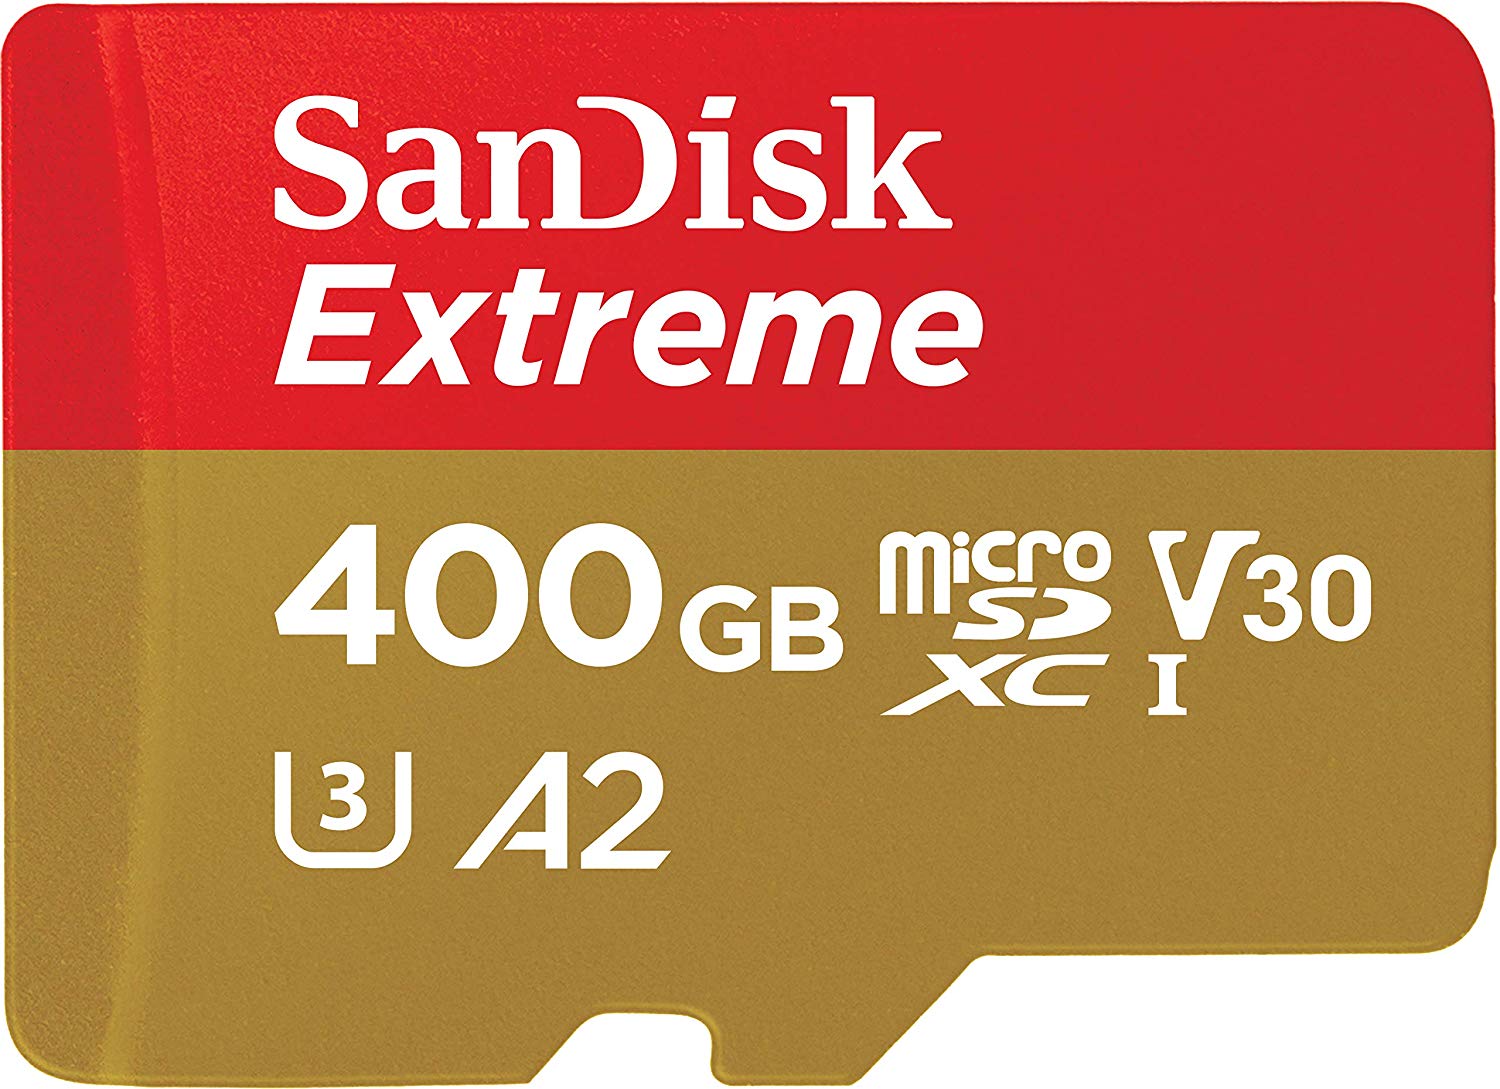 SanDisk Extreme 400GB